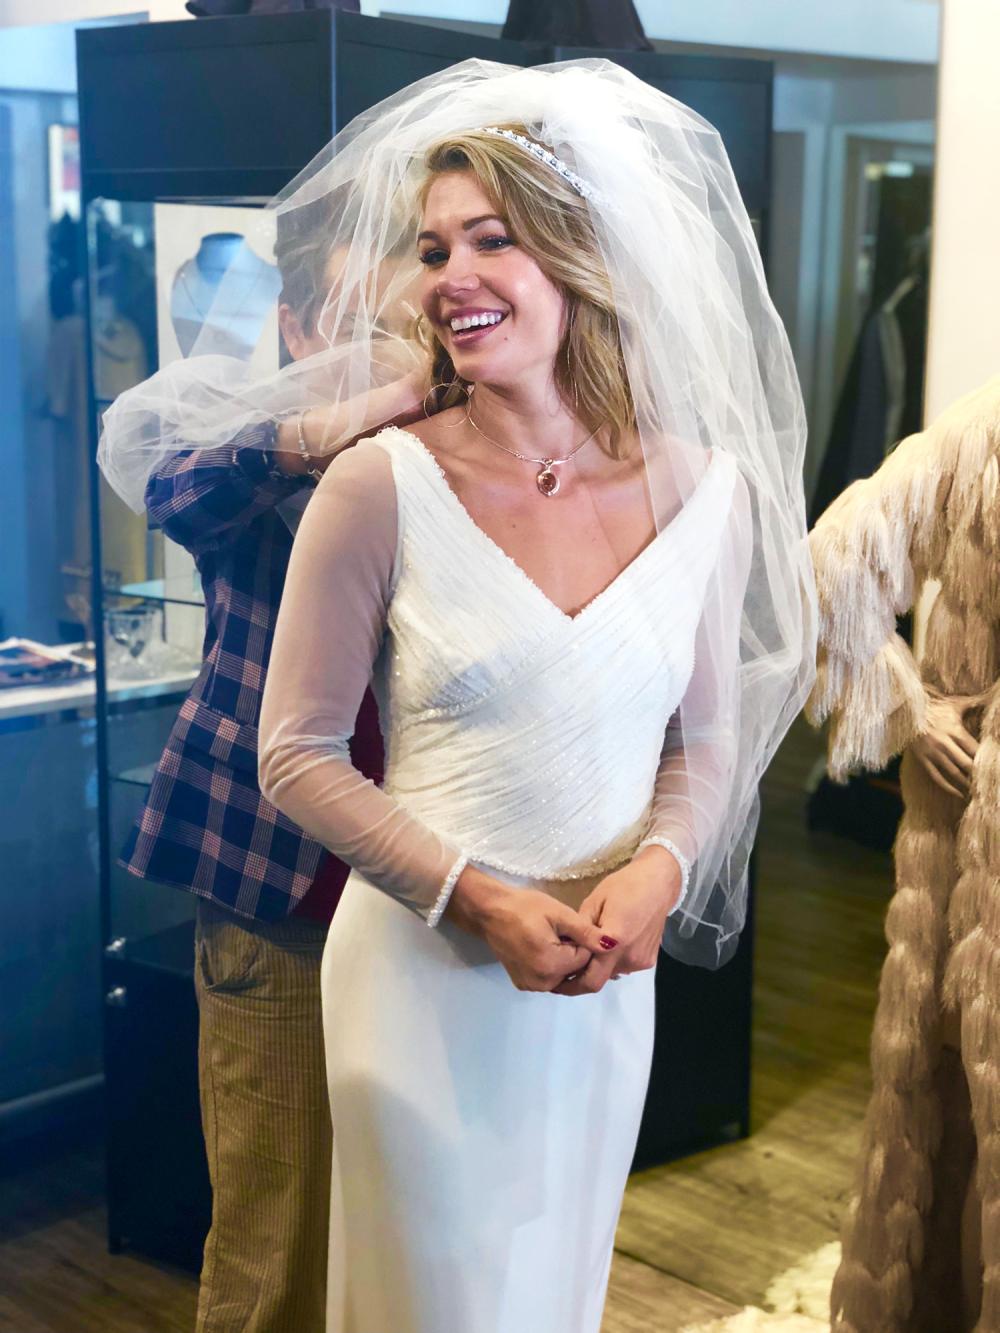 BIP’s Krystal Nielson Tries on Wedding Dress After Chris Randone Engagement